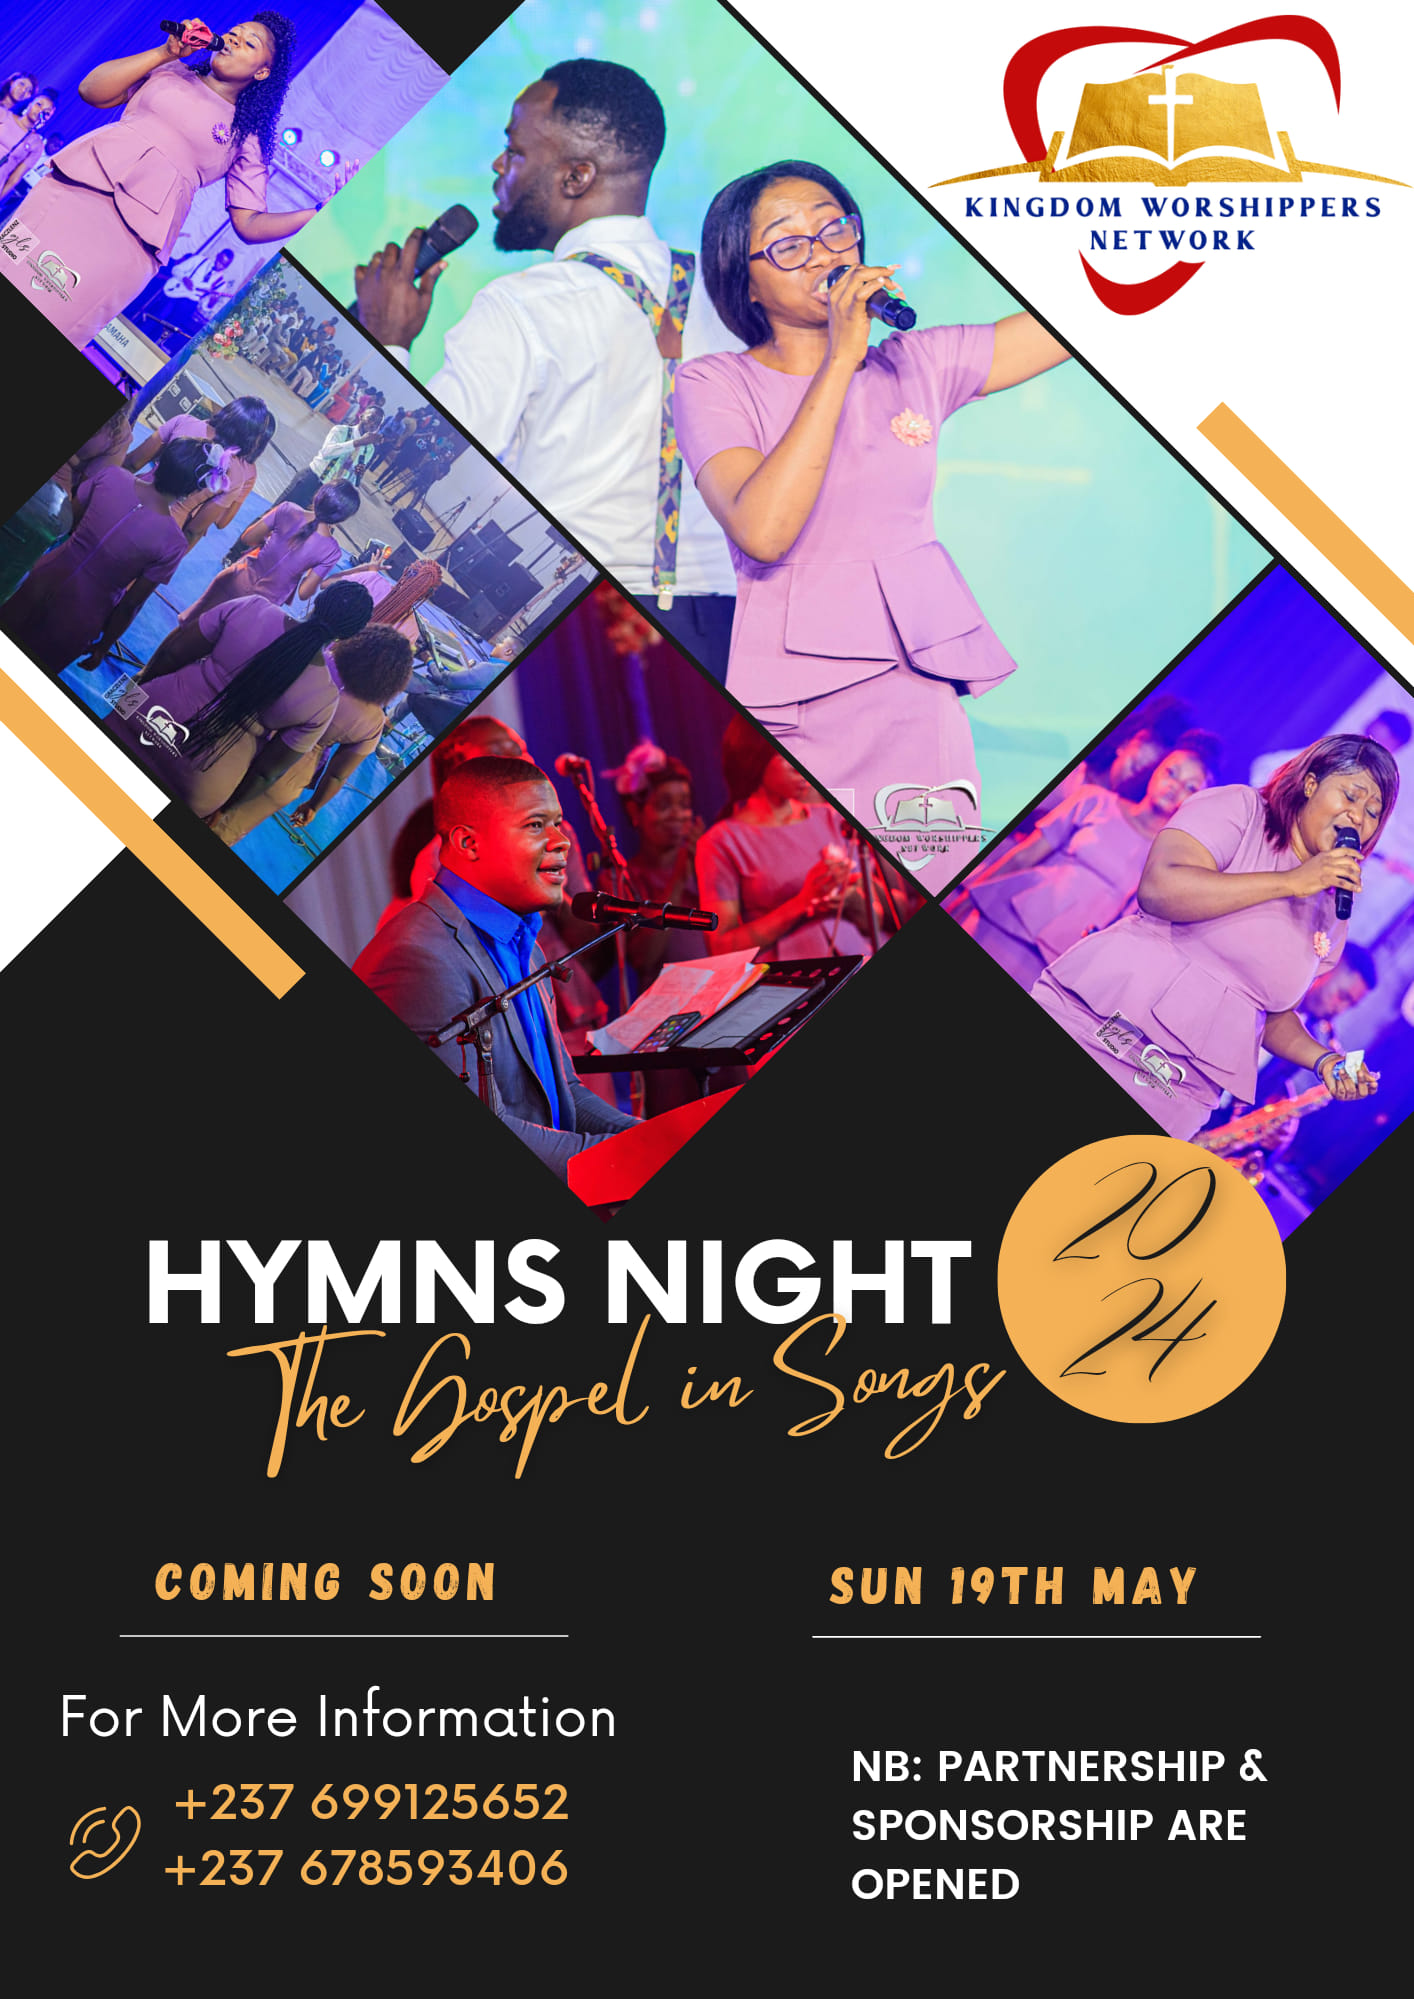 Hymns Night - The Gospel in songs coming soon